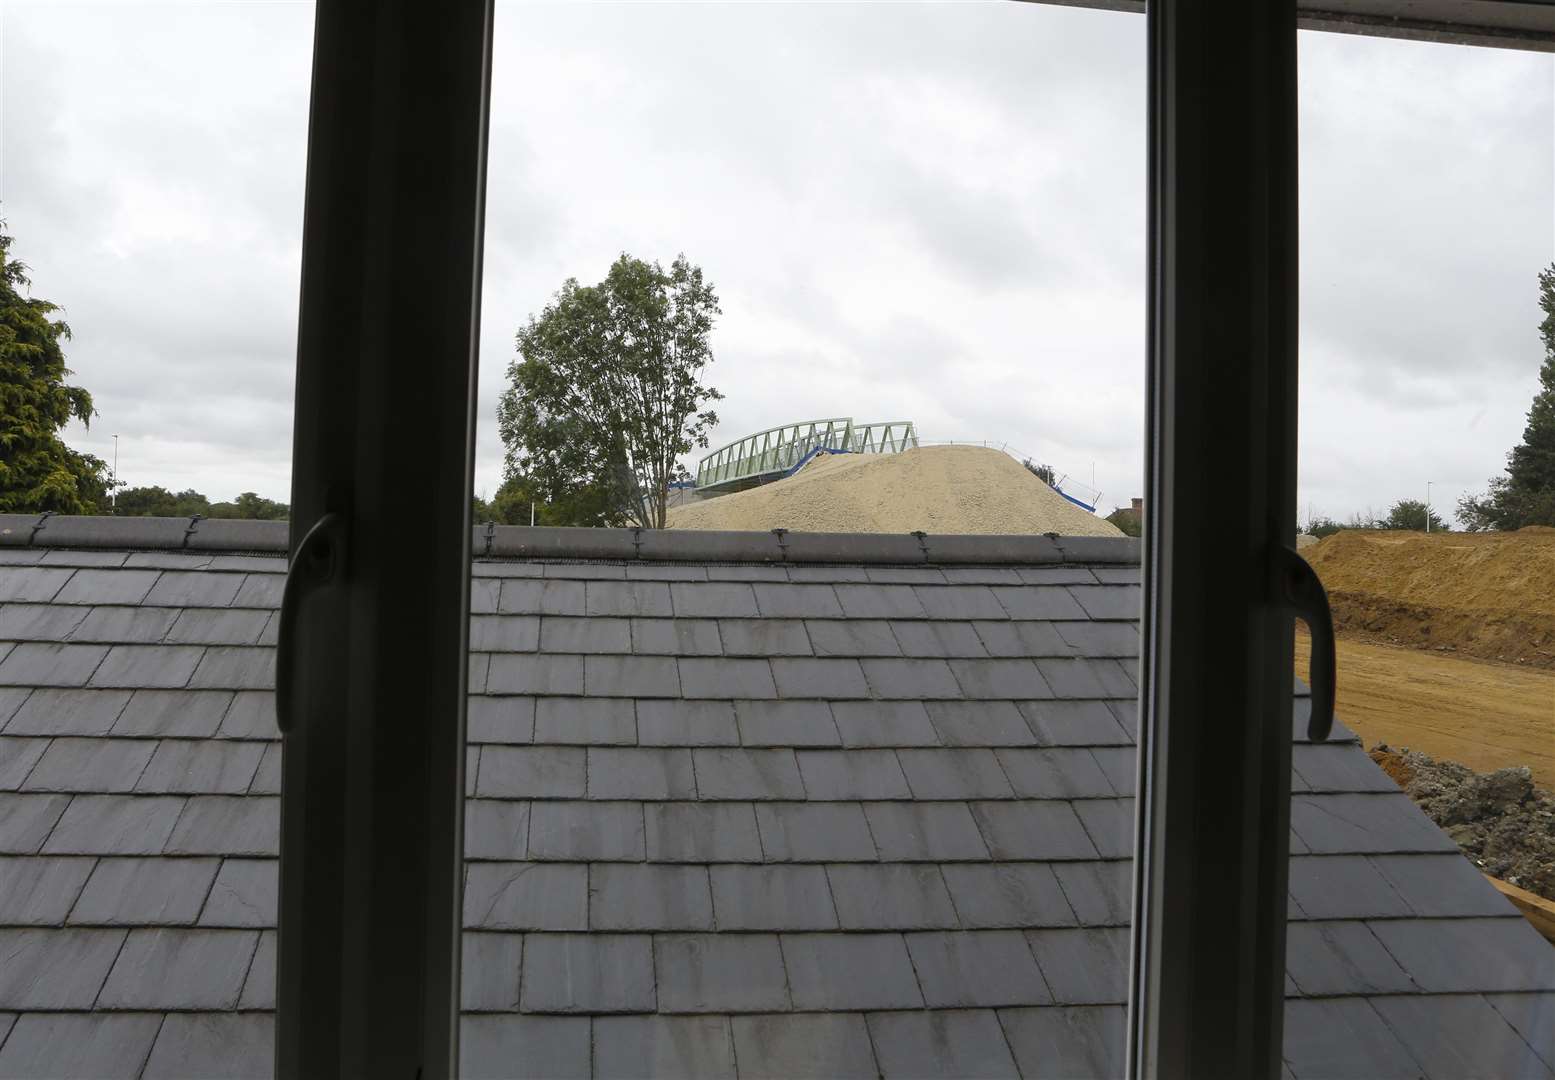 The view of the new footbridge from Lisa Harvey's bedroom window